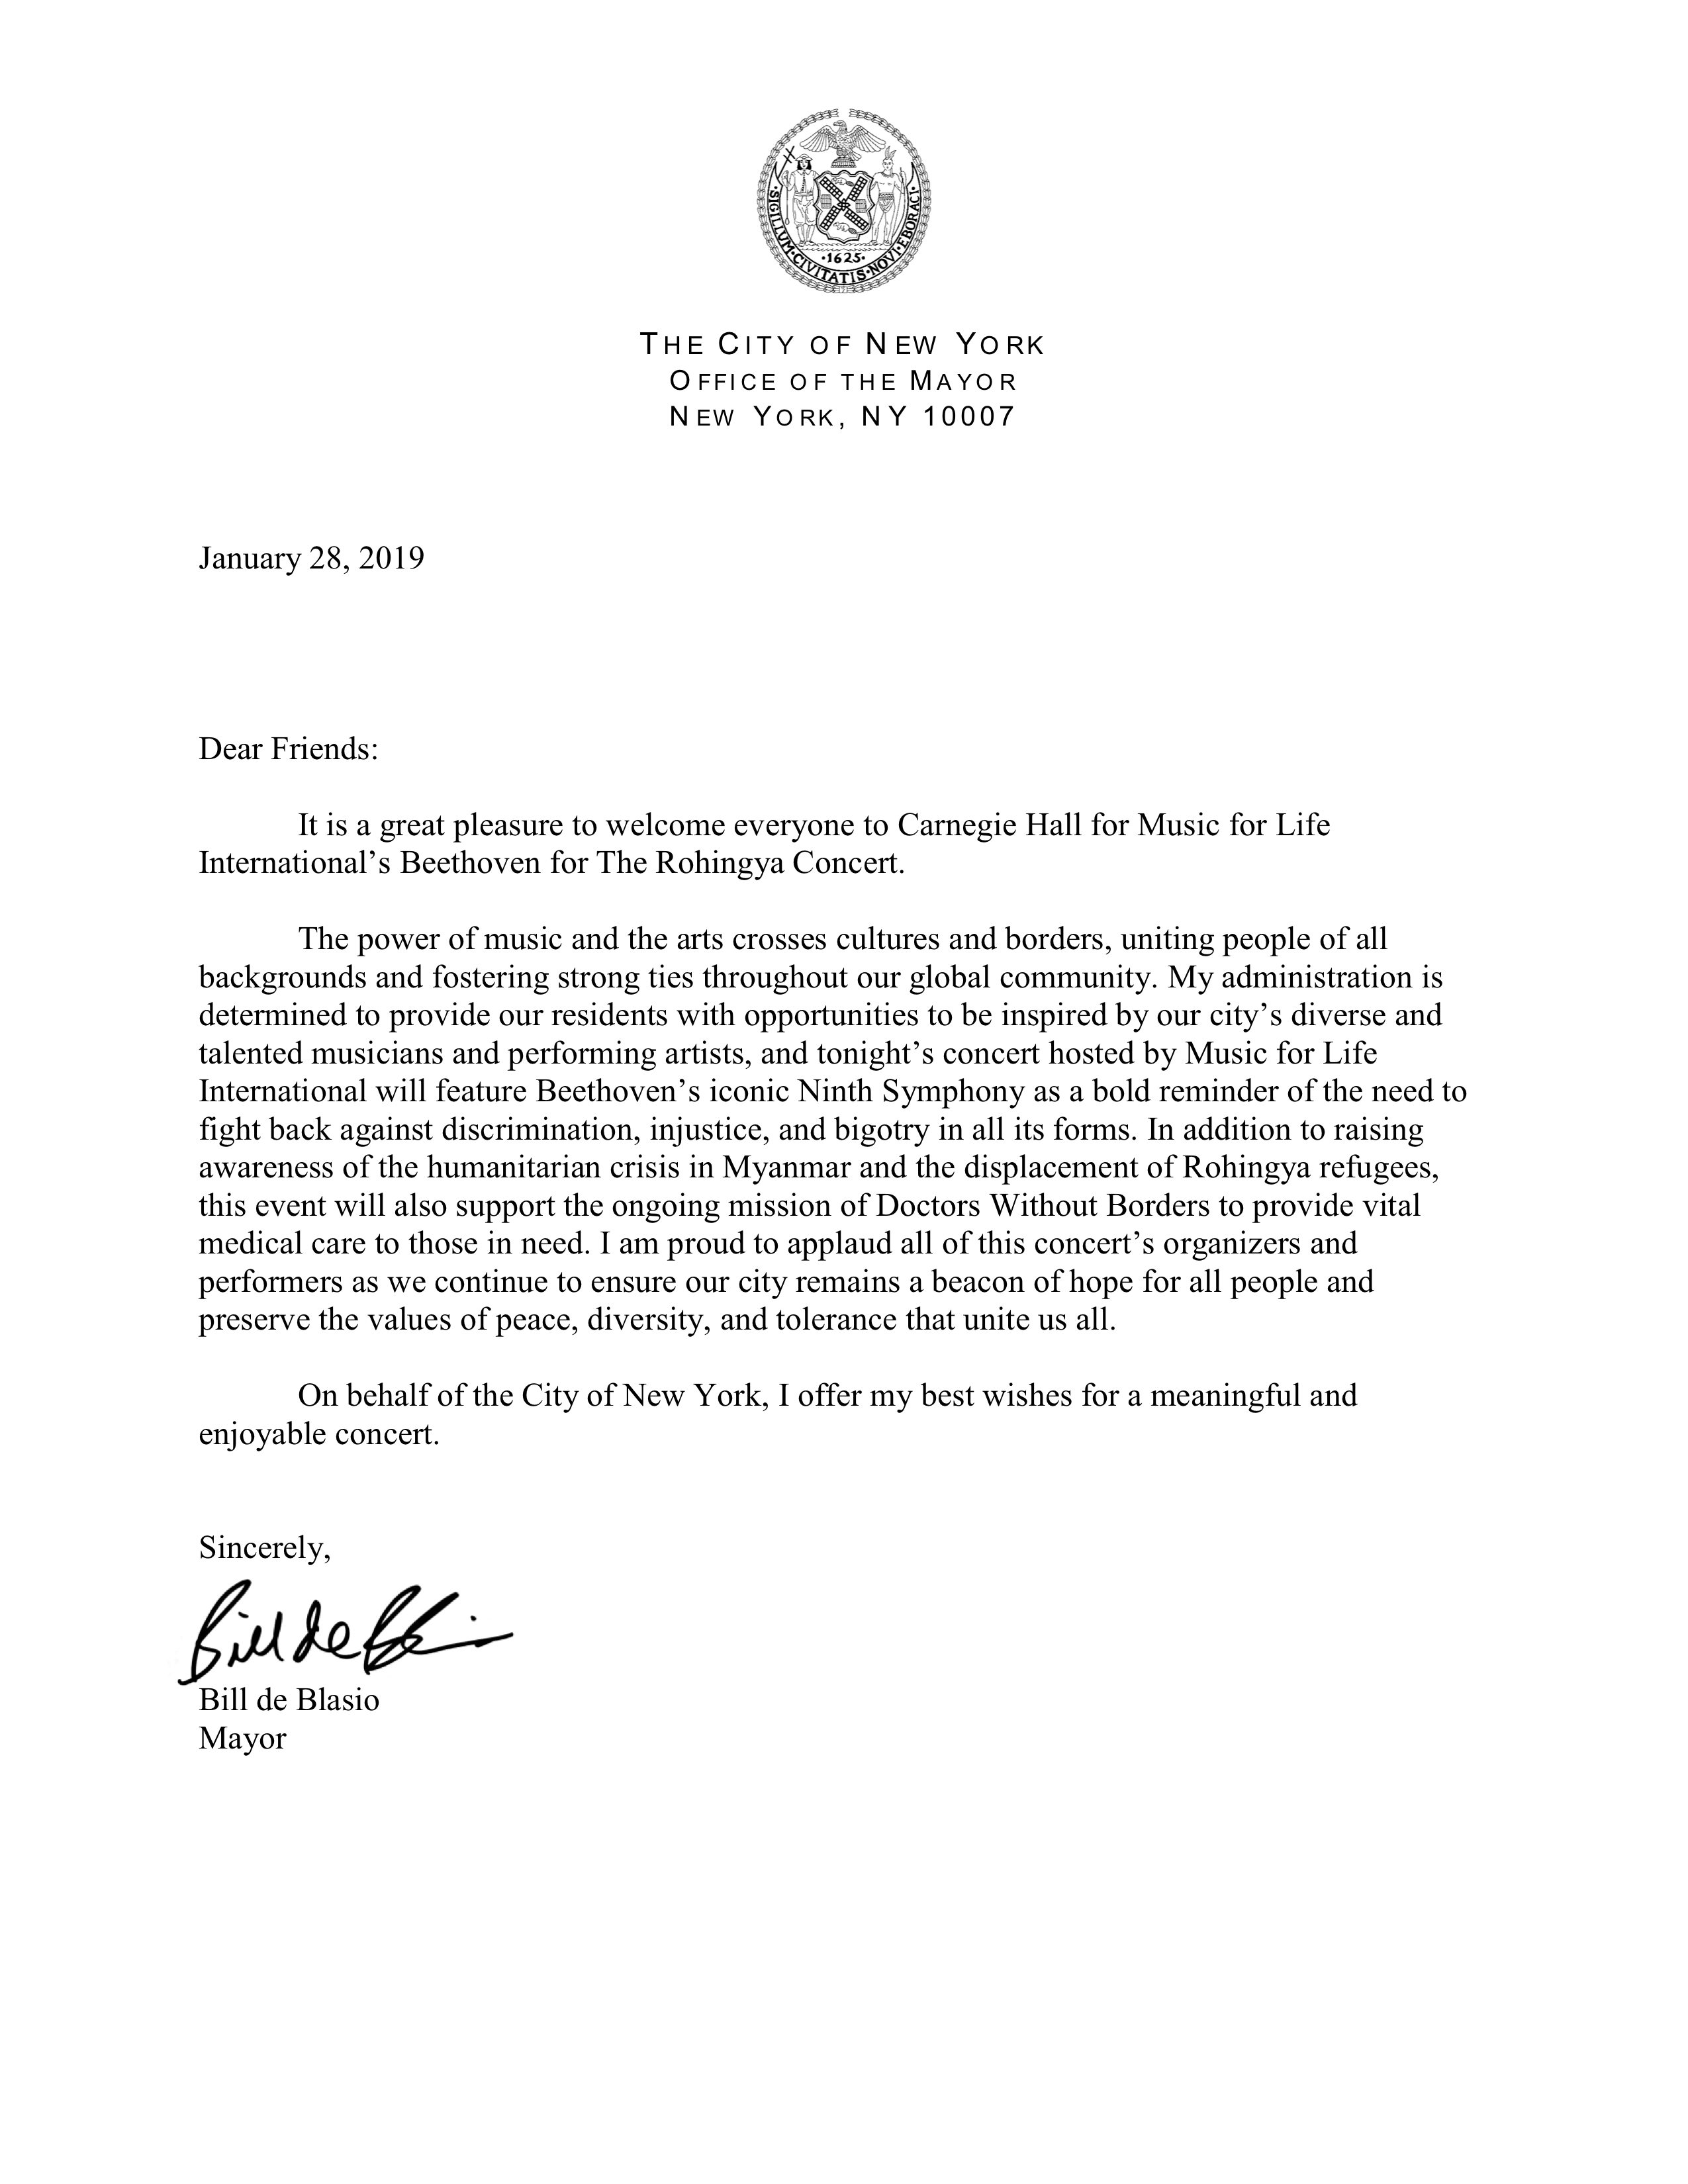 Mayor's Message Bill de Blasio for Carnegie Hall